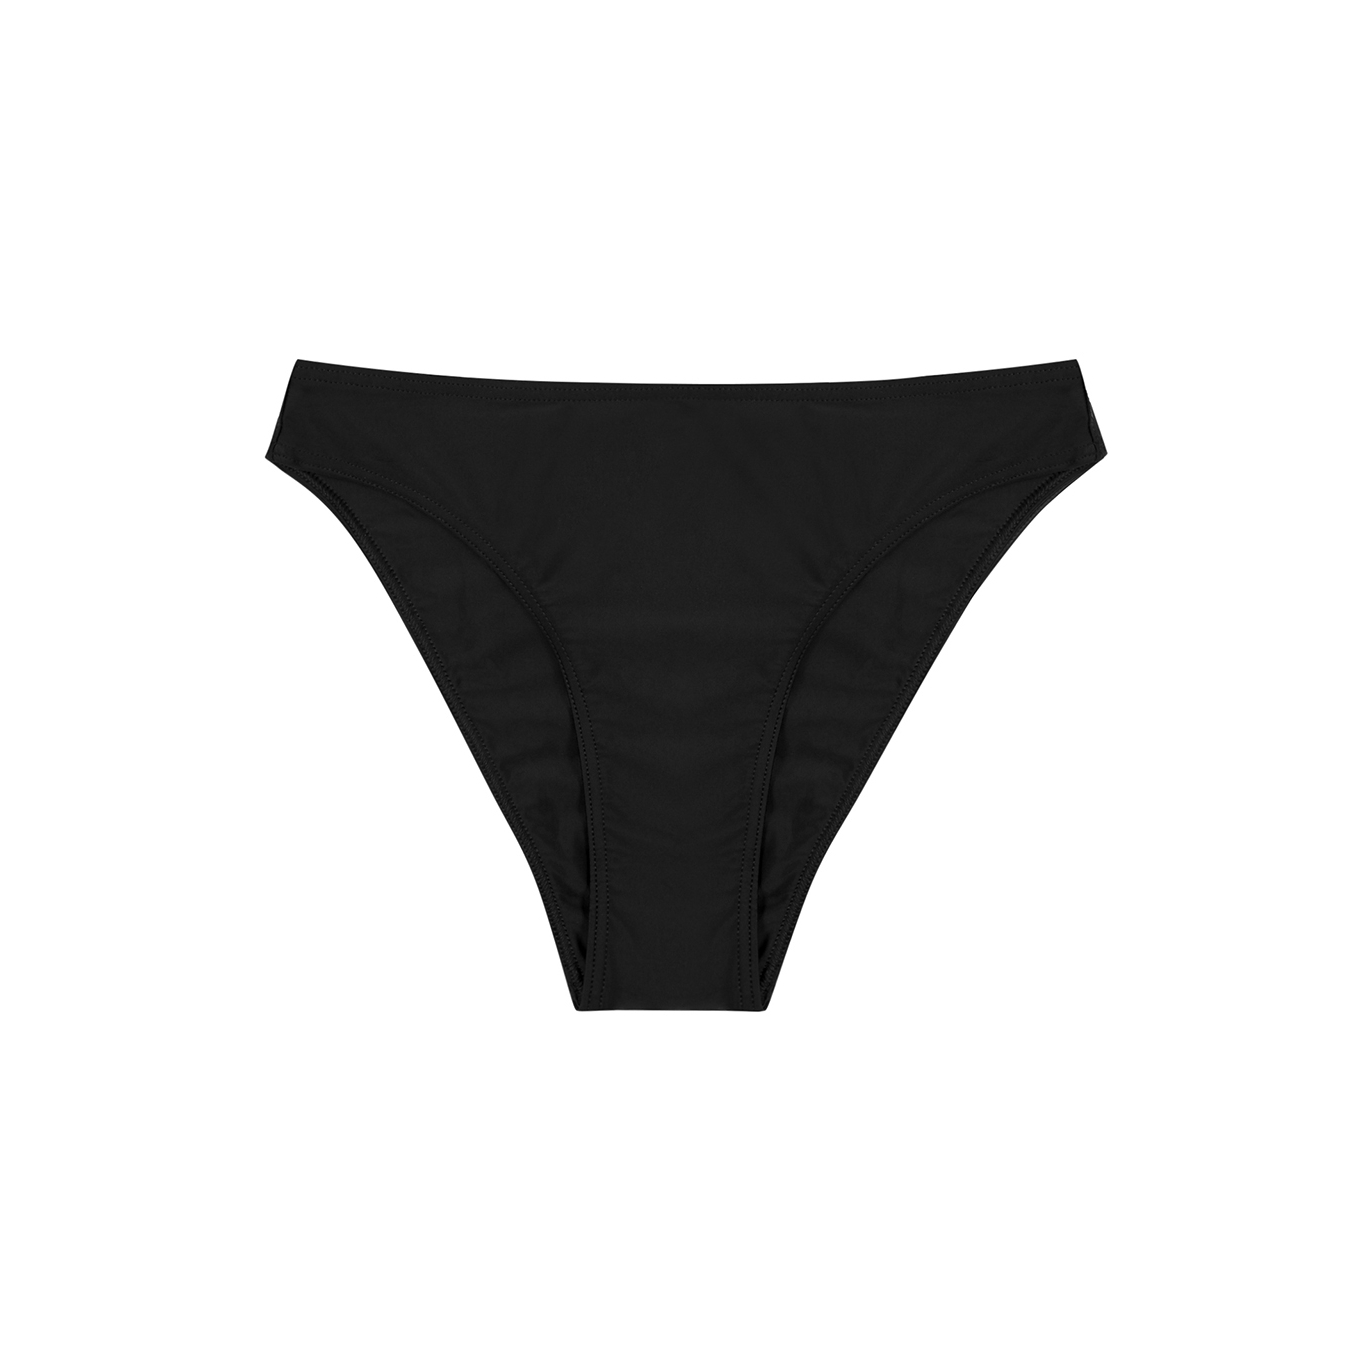 Matteau The Nineties black bikini briefs - Harvey Nichols